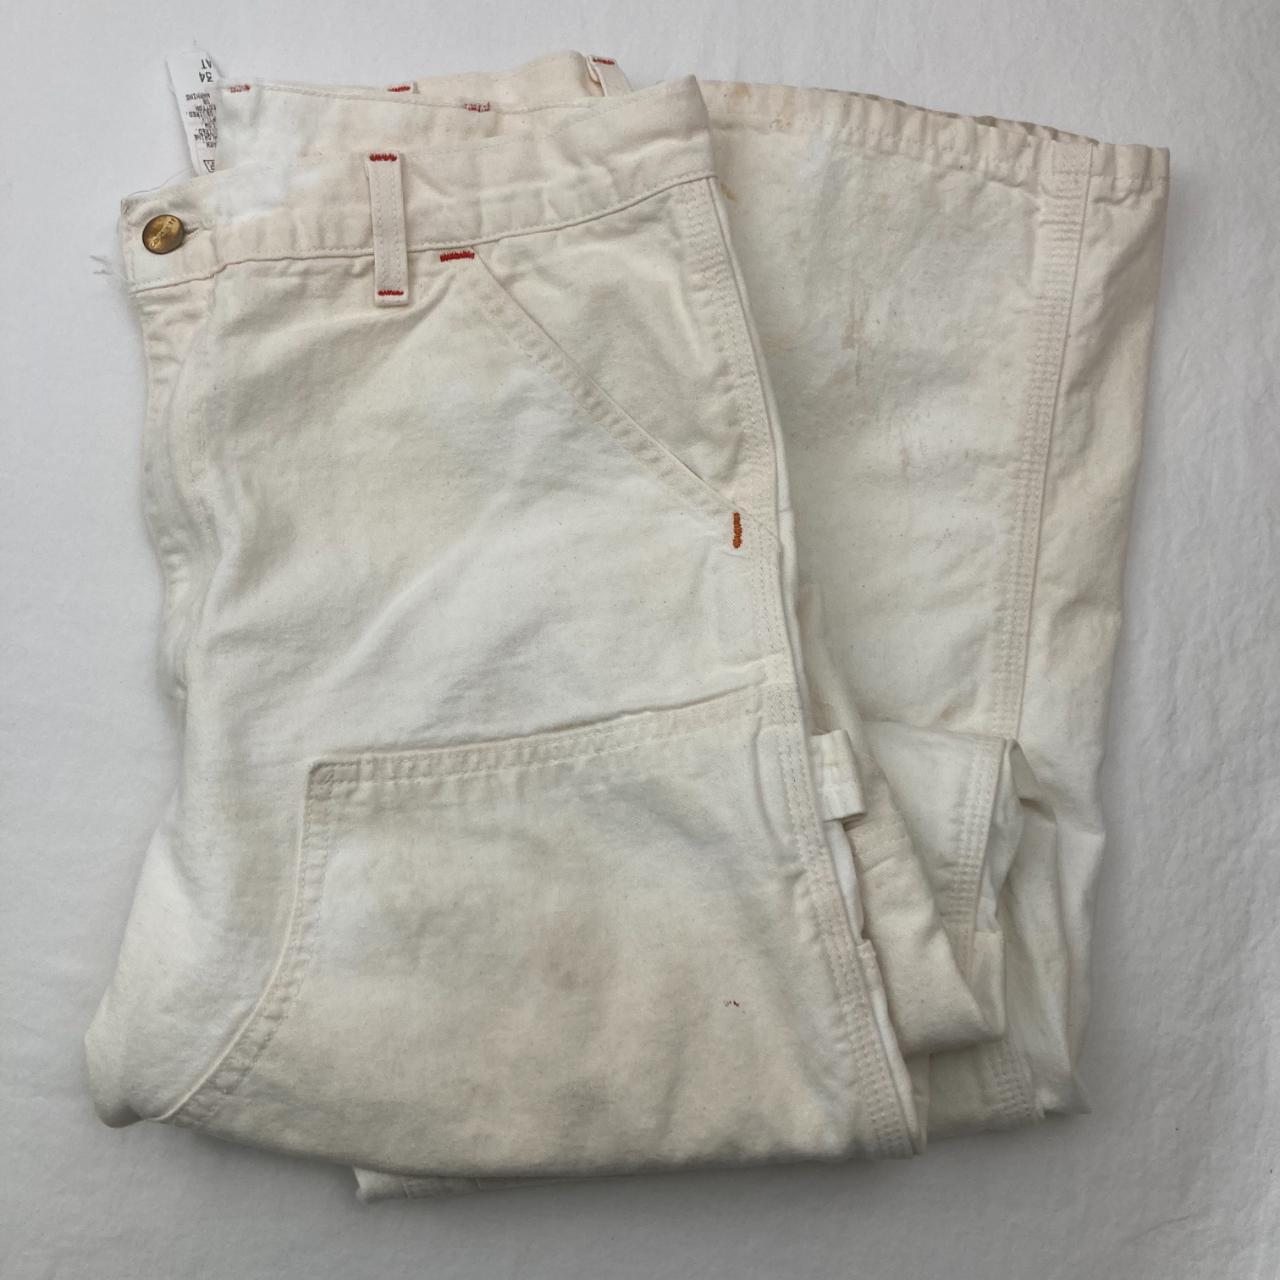 Vintage Carhartt double knee painters pants | super... - Depop